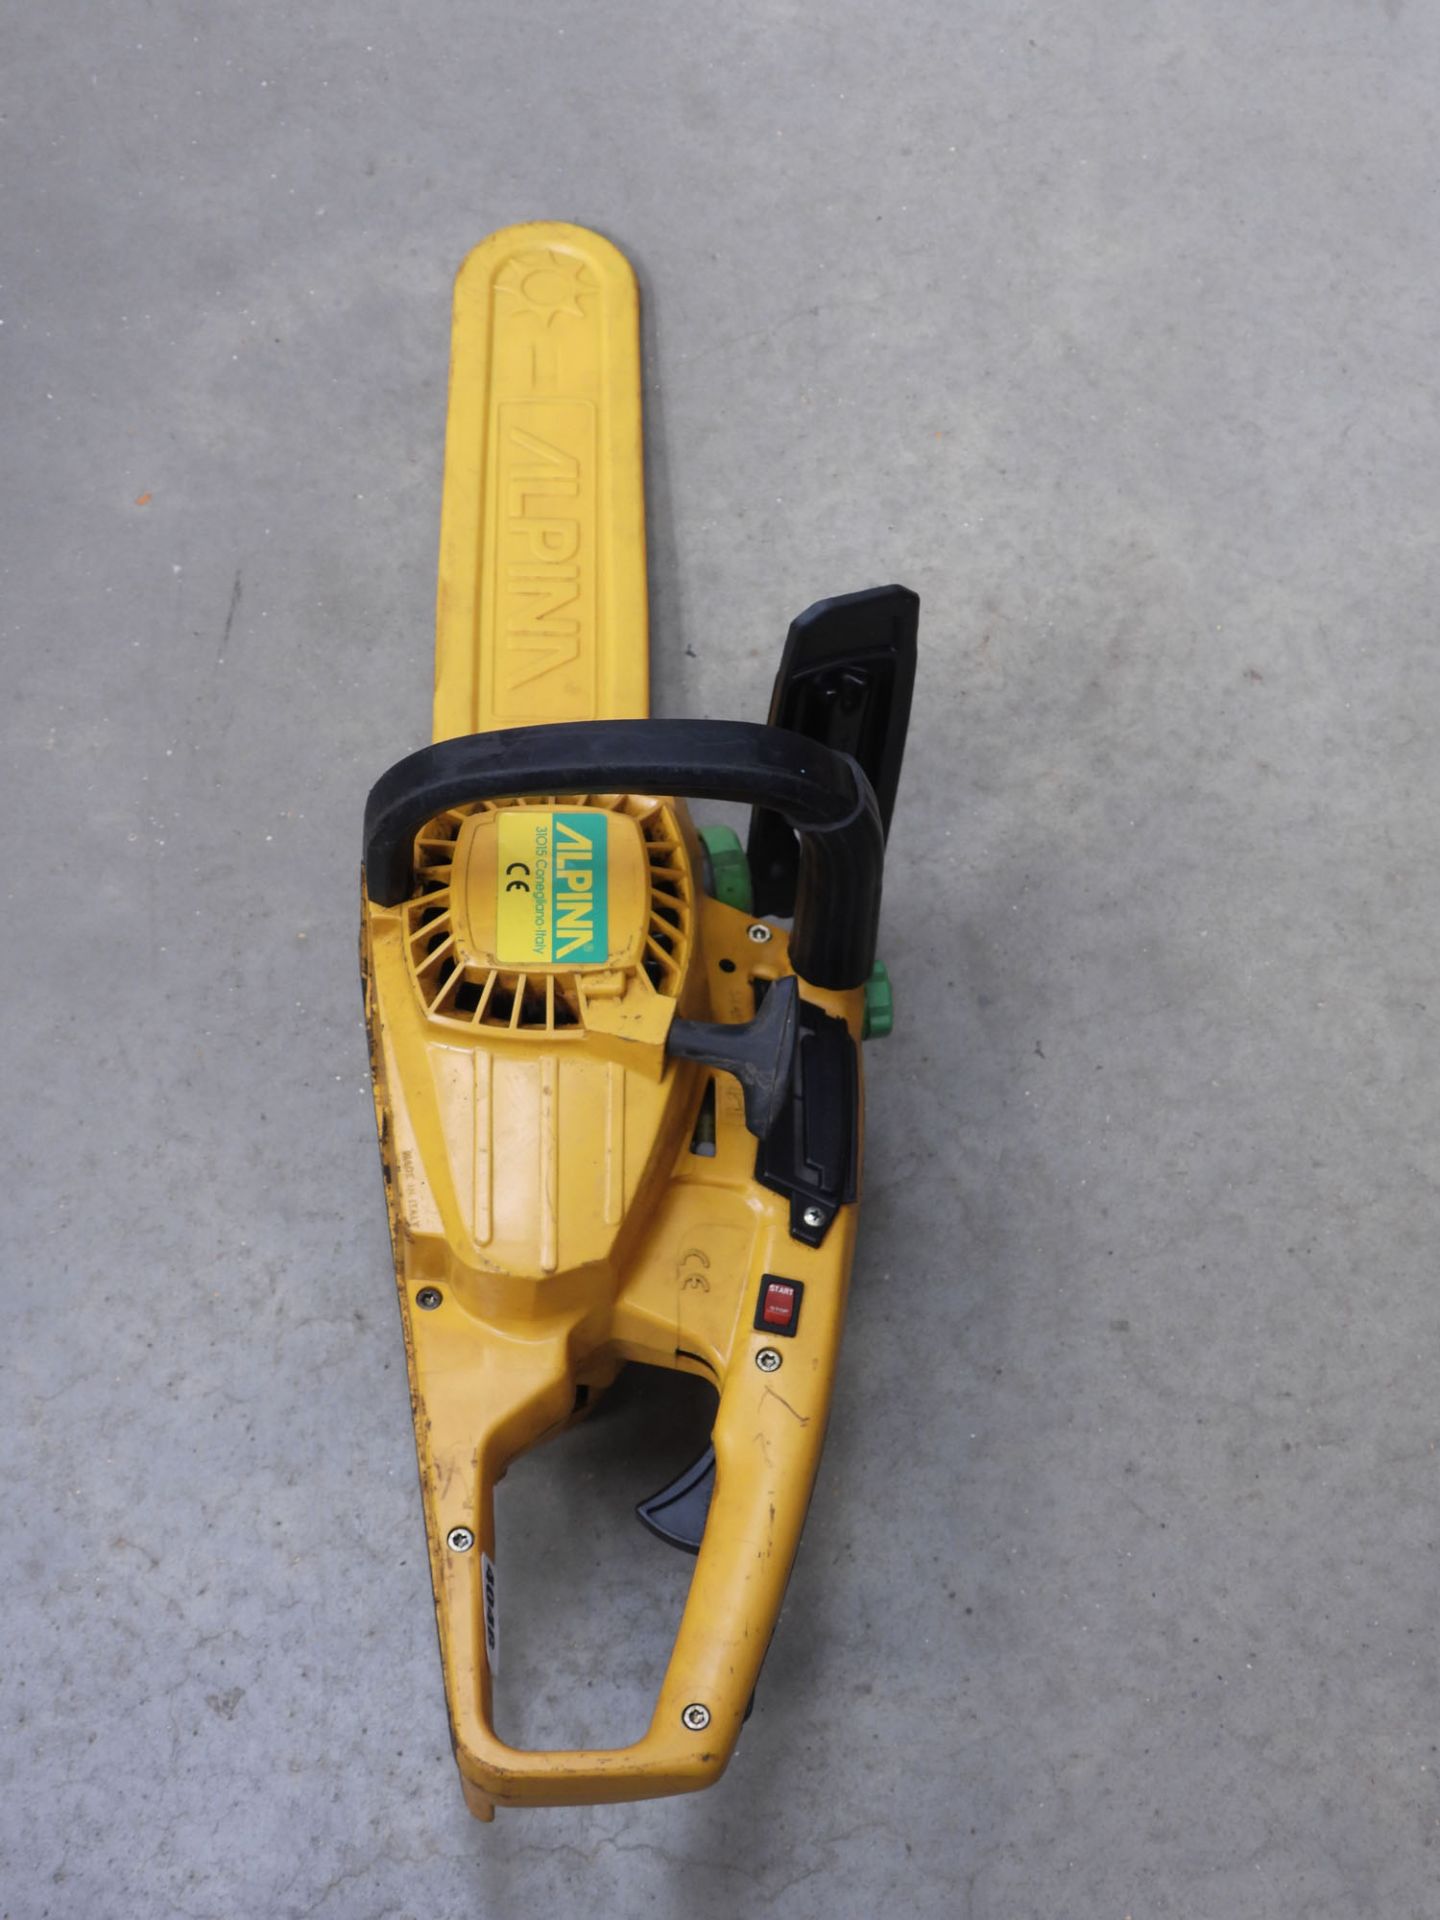 4061 Alpina yellow petrol powered chainsaw